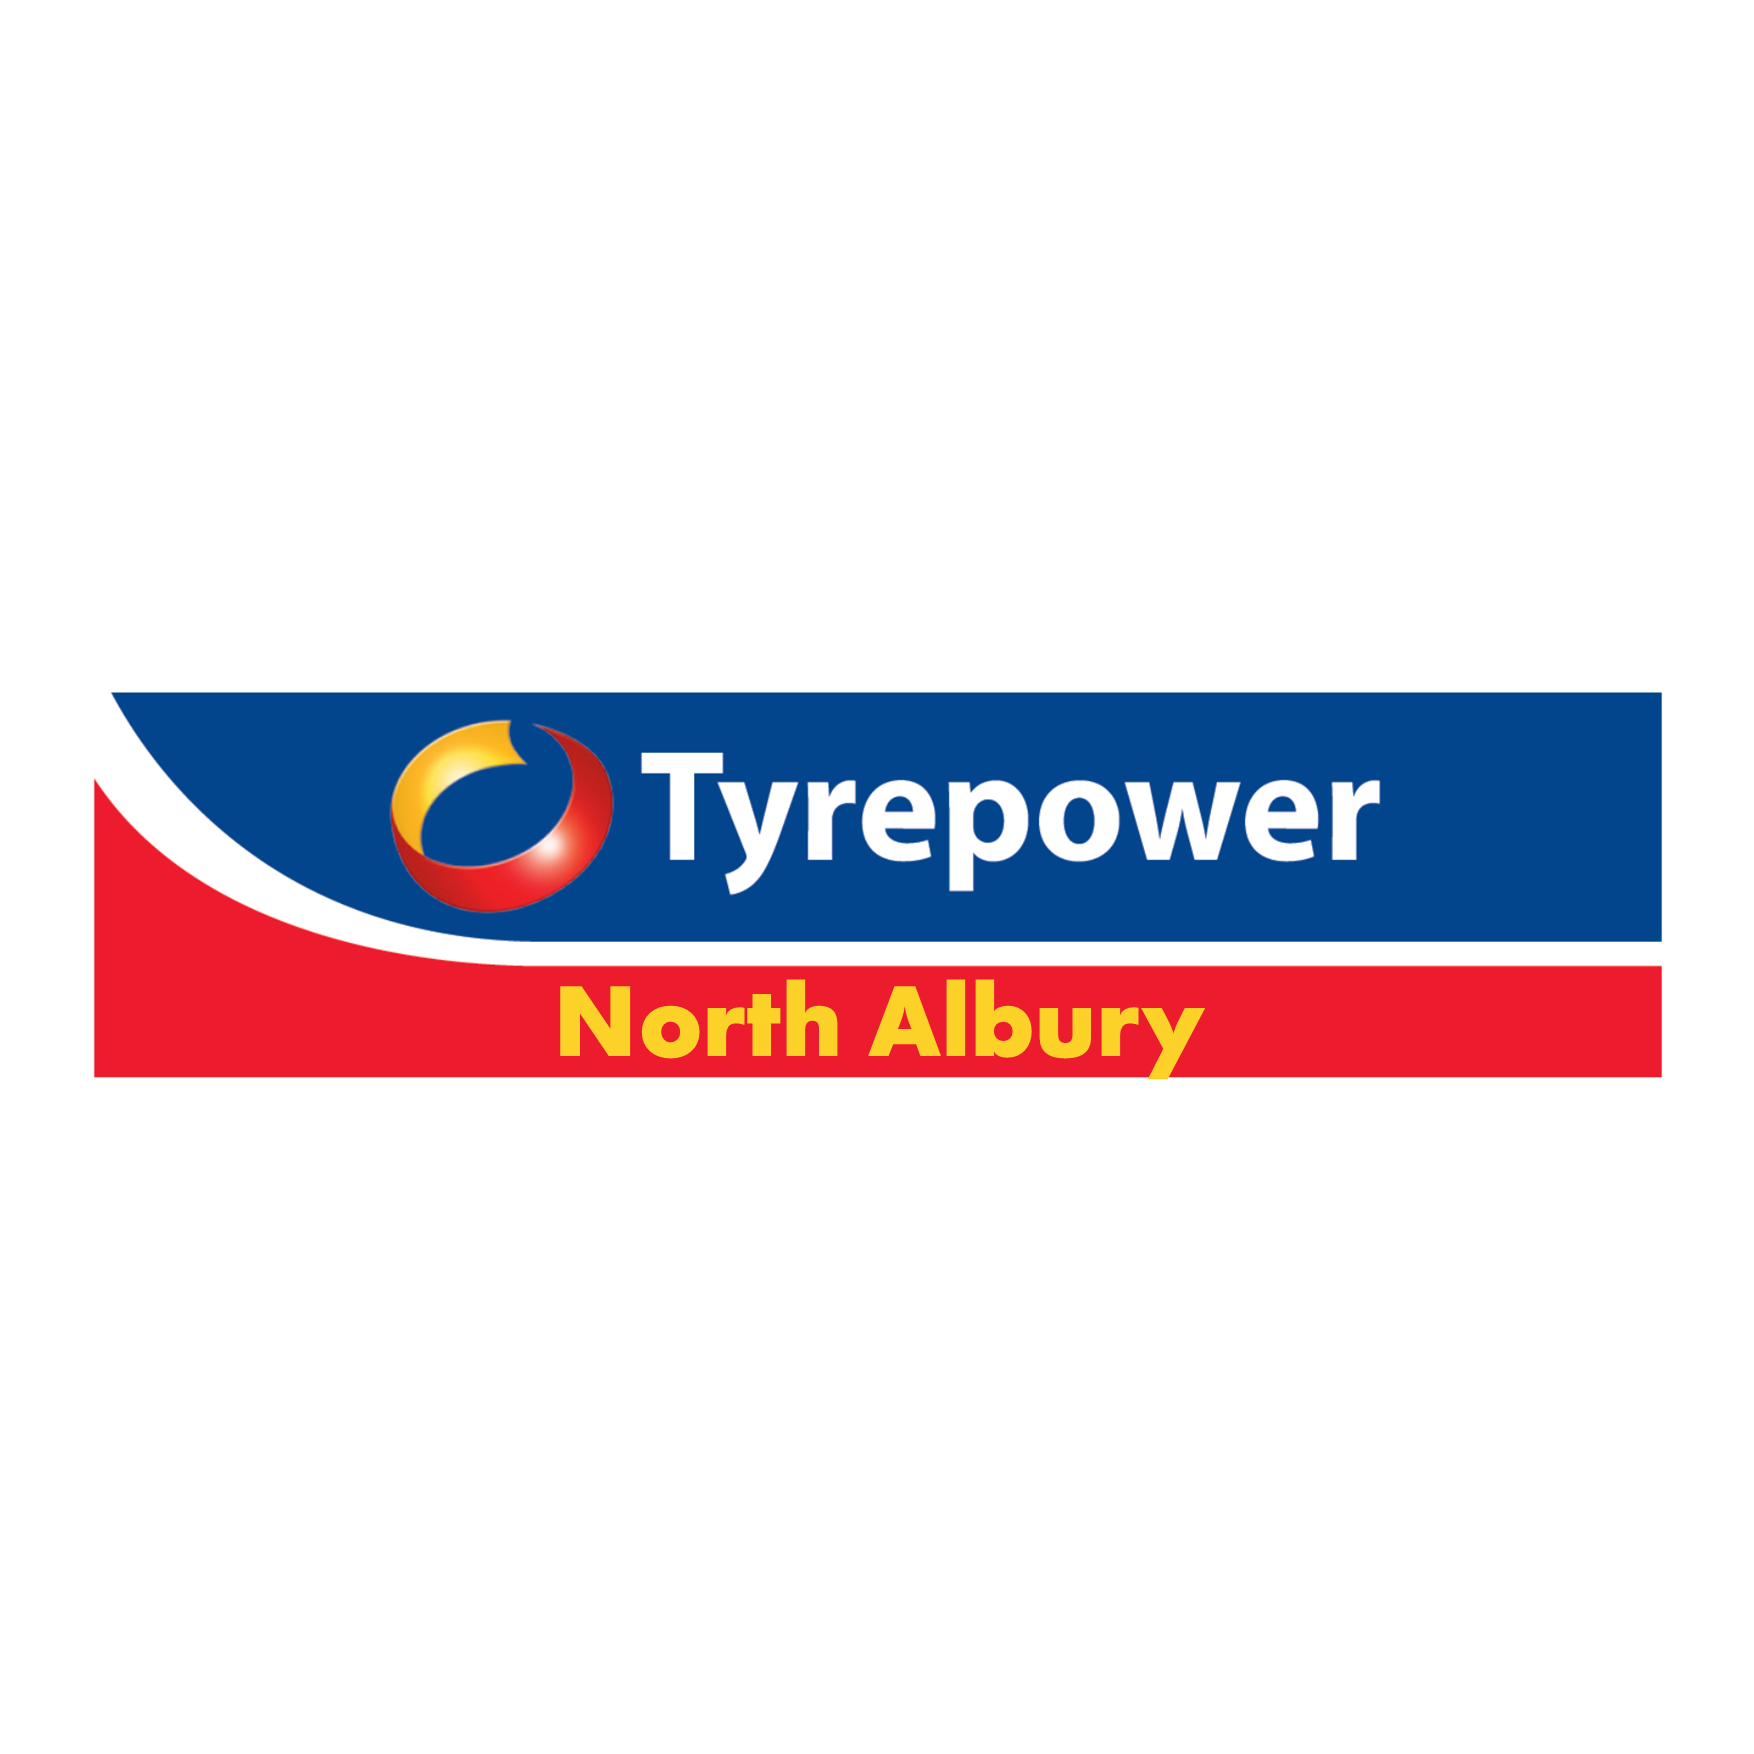 North Albury Tyrepower & Mechanical Lavington (02) 6025 3381